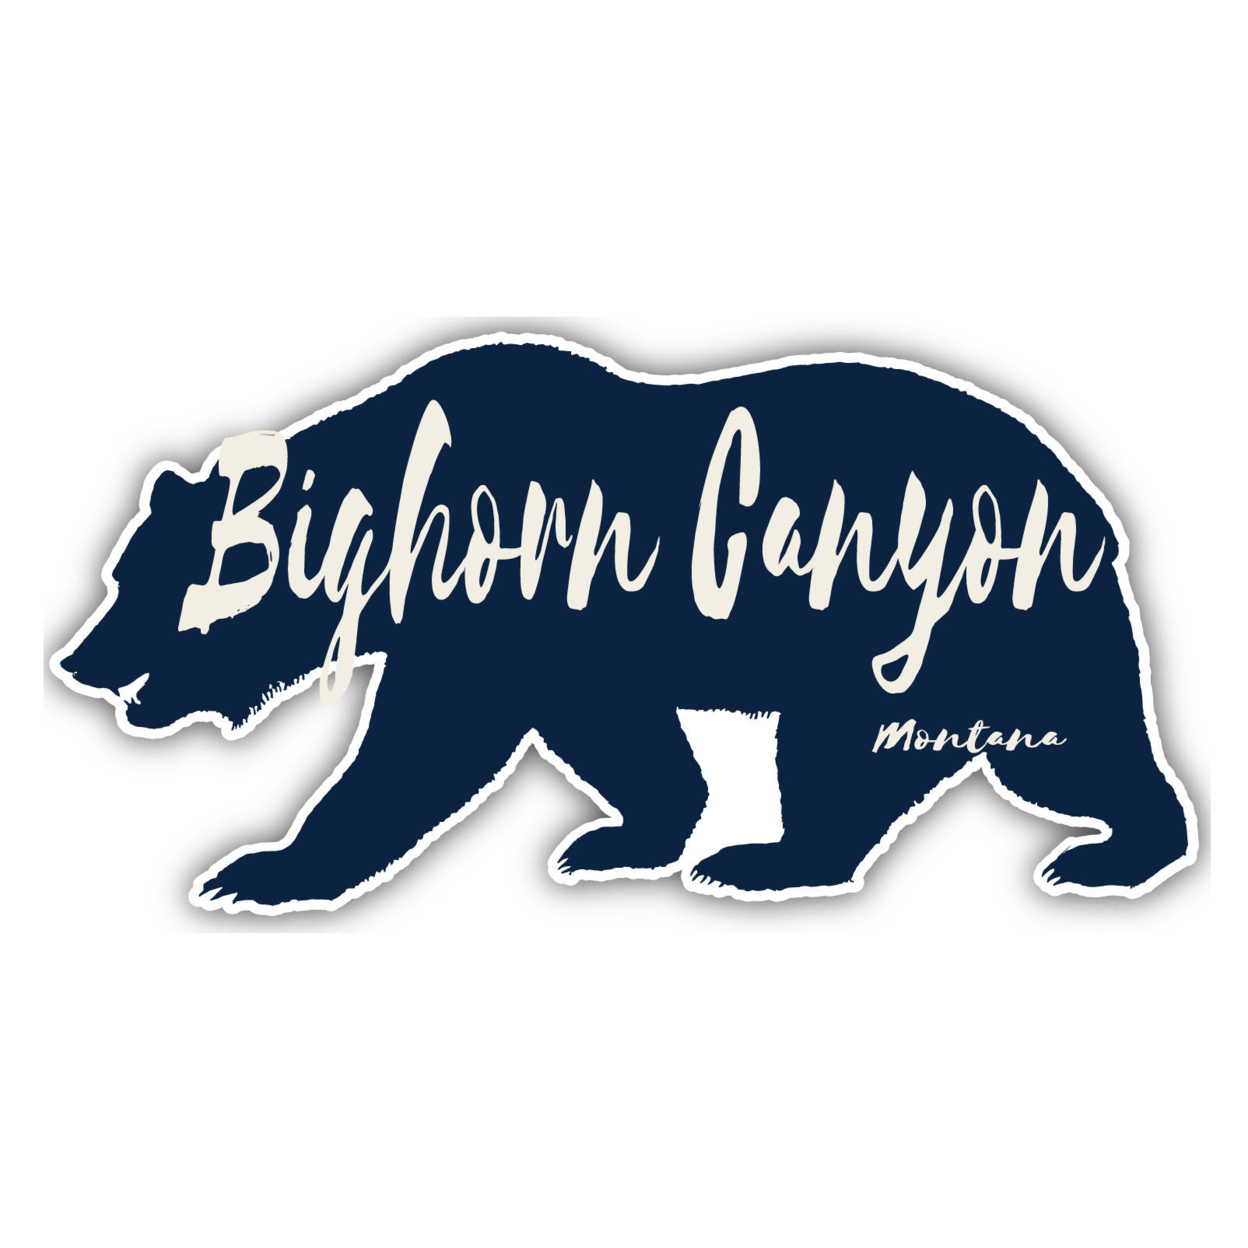 Bighorn Canyon Montana Souvenir Decorative Stickers (Choose Theme And Size) - Single Unit, 10-Inch, Bear